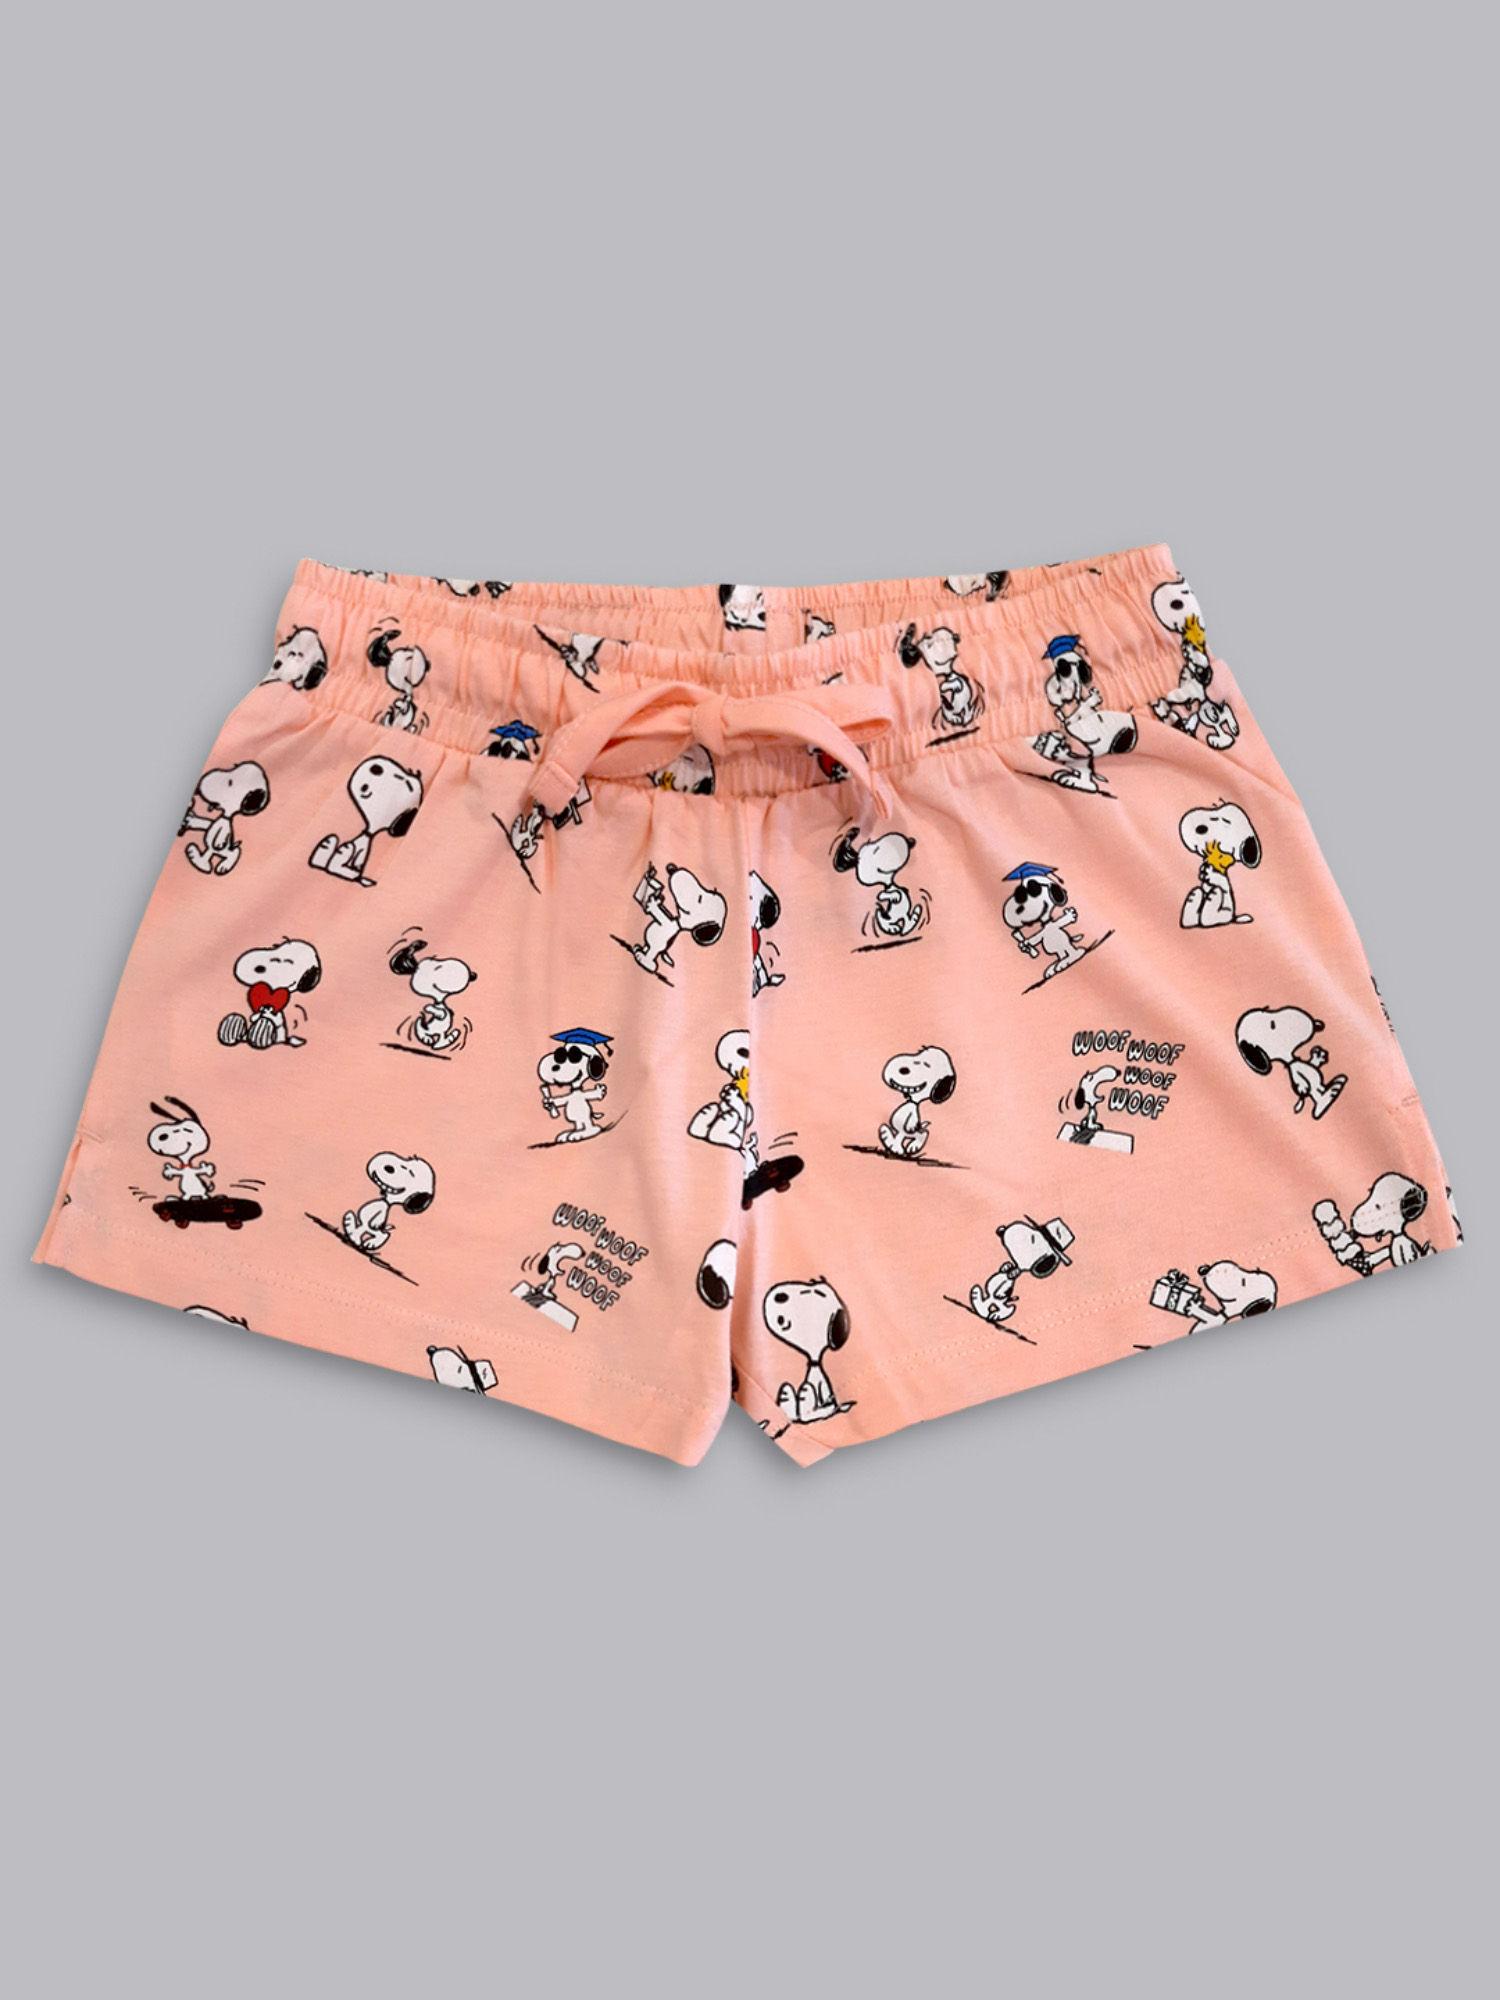 peanuts-printed-shorts-for-girls---peach